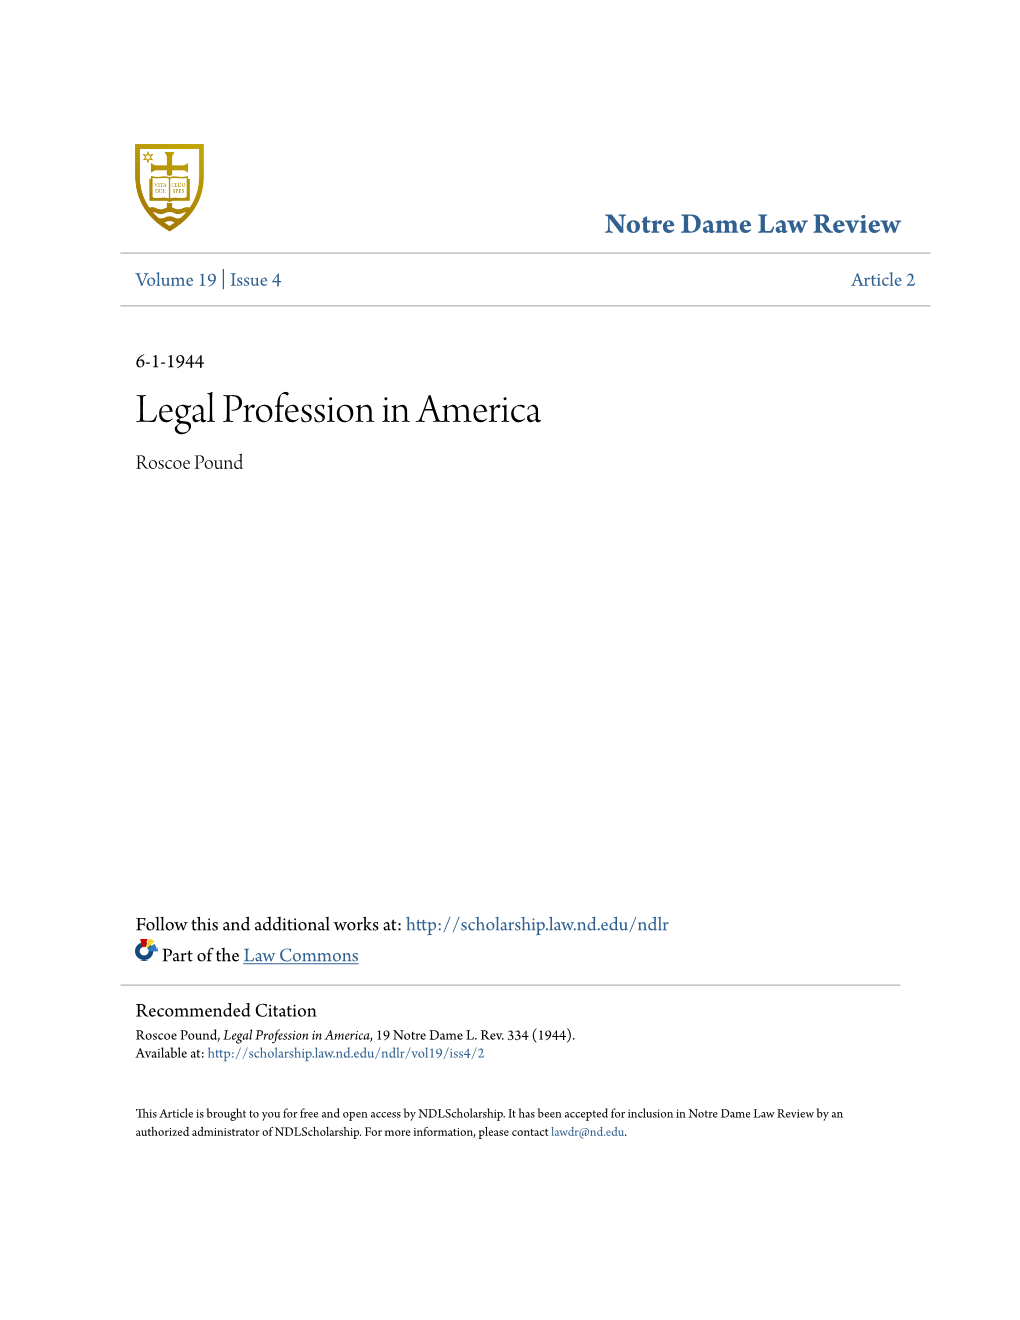 Legal Profession in America Roscoe Pound